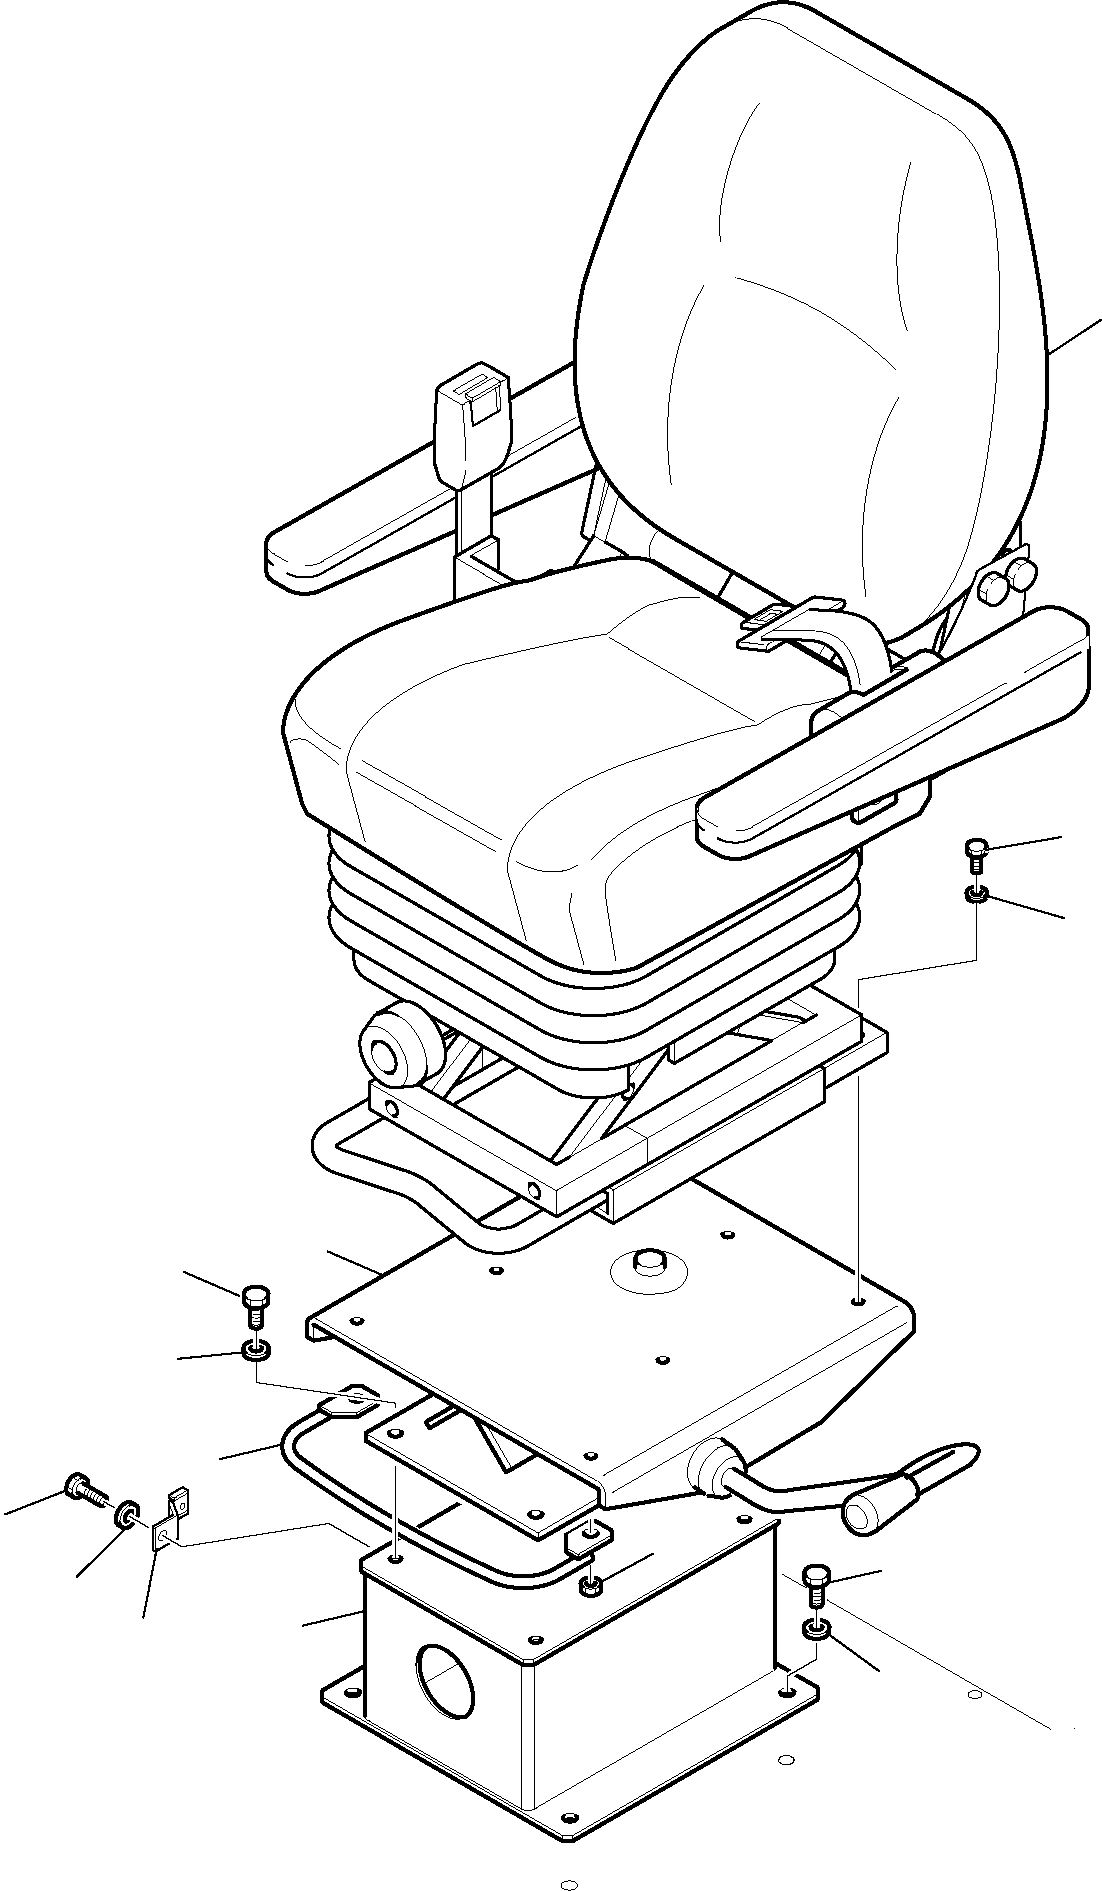 5710. OPERATOR'S SEAT (2/2) [5710] - Komatsu part WB97S-5 S/N F00003-Up [wb97s5]